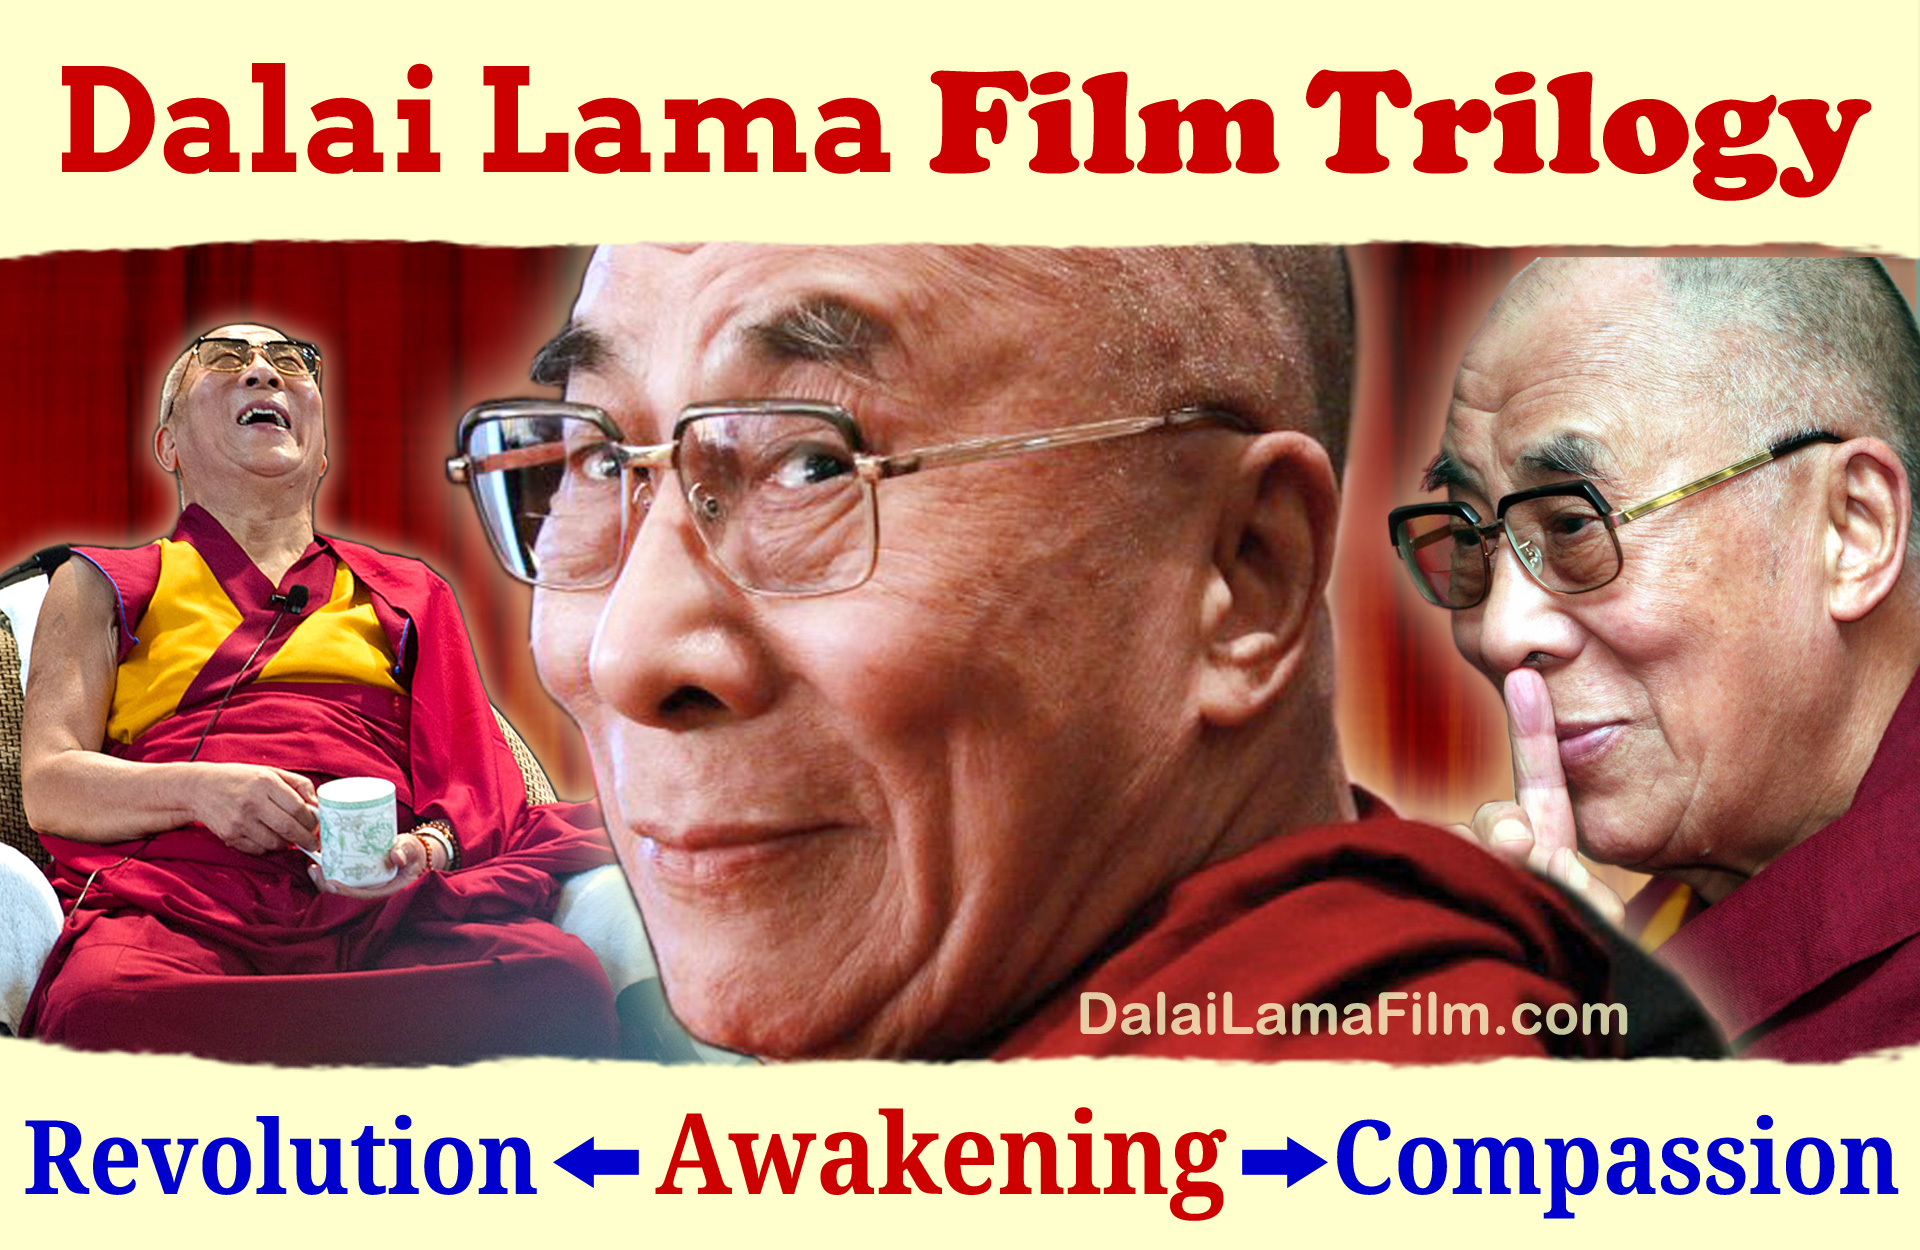 dalai-lama-film-trilogy-ad-v2-3-dalai-lamas-top-and-bottom-text-url-on-image-red-awakening-1920x1250